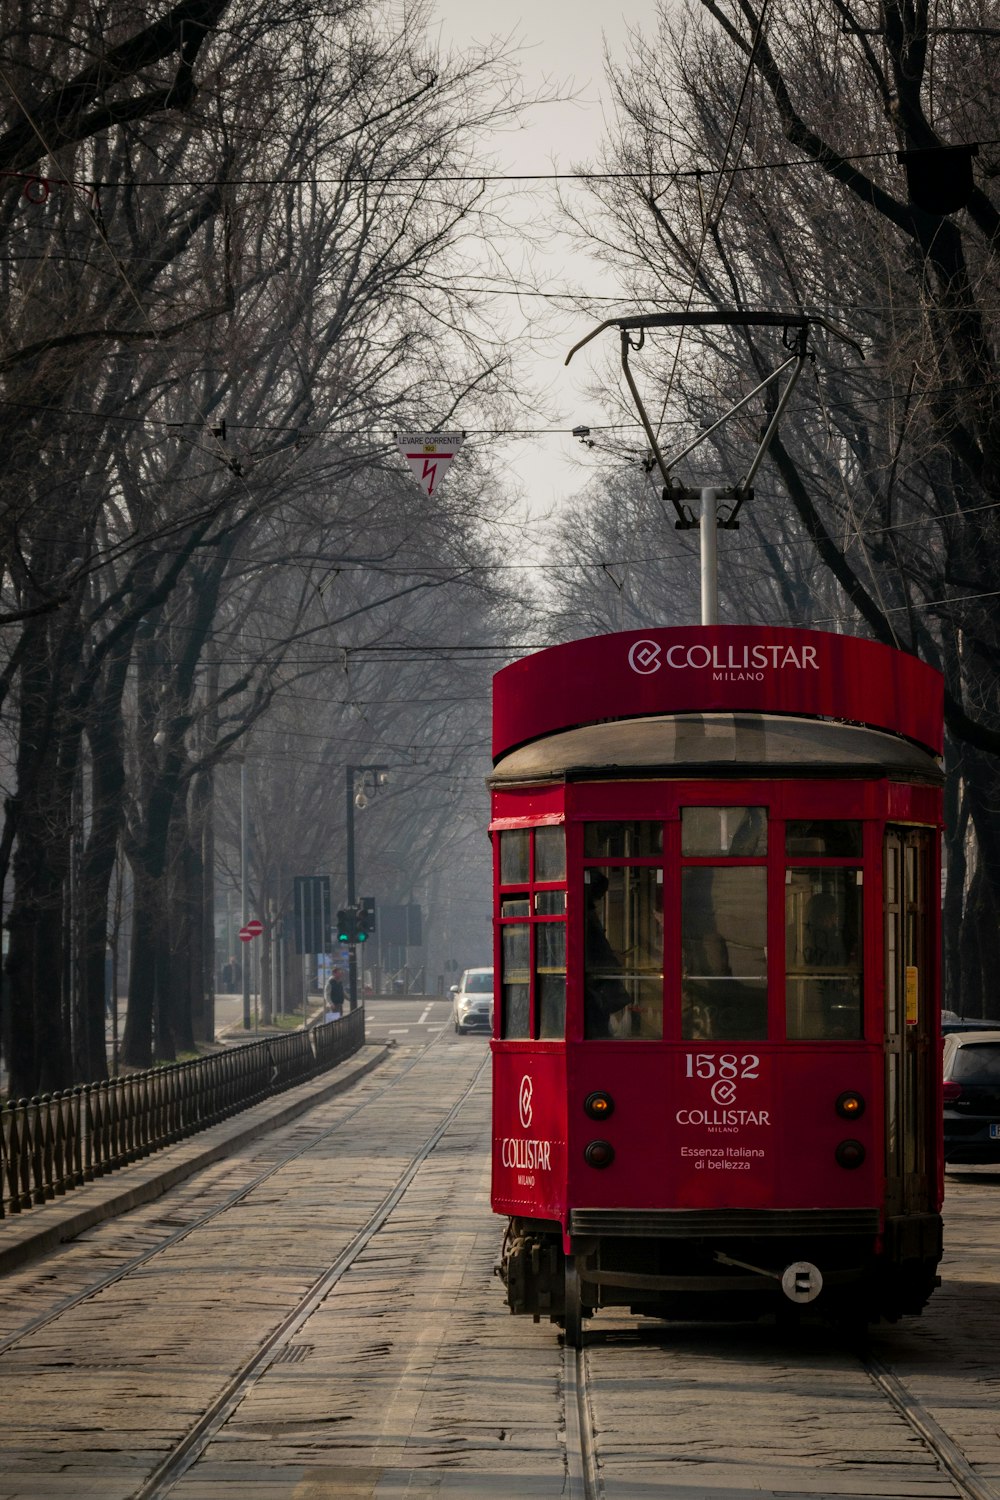 a red trolley car on a street